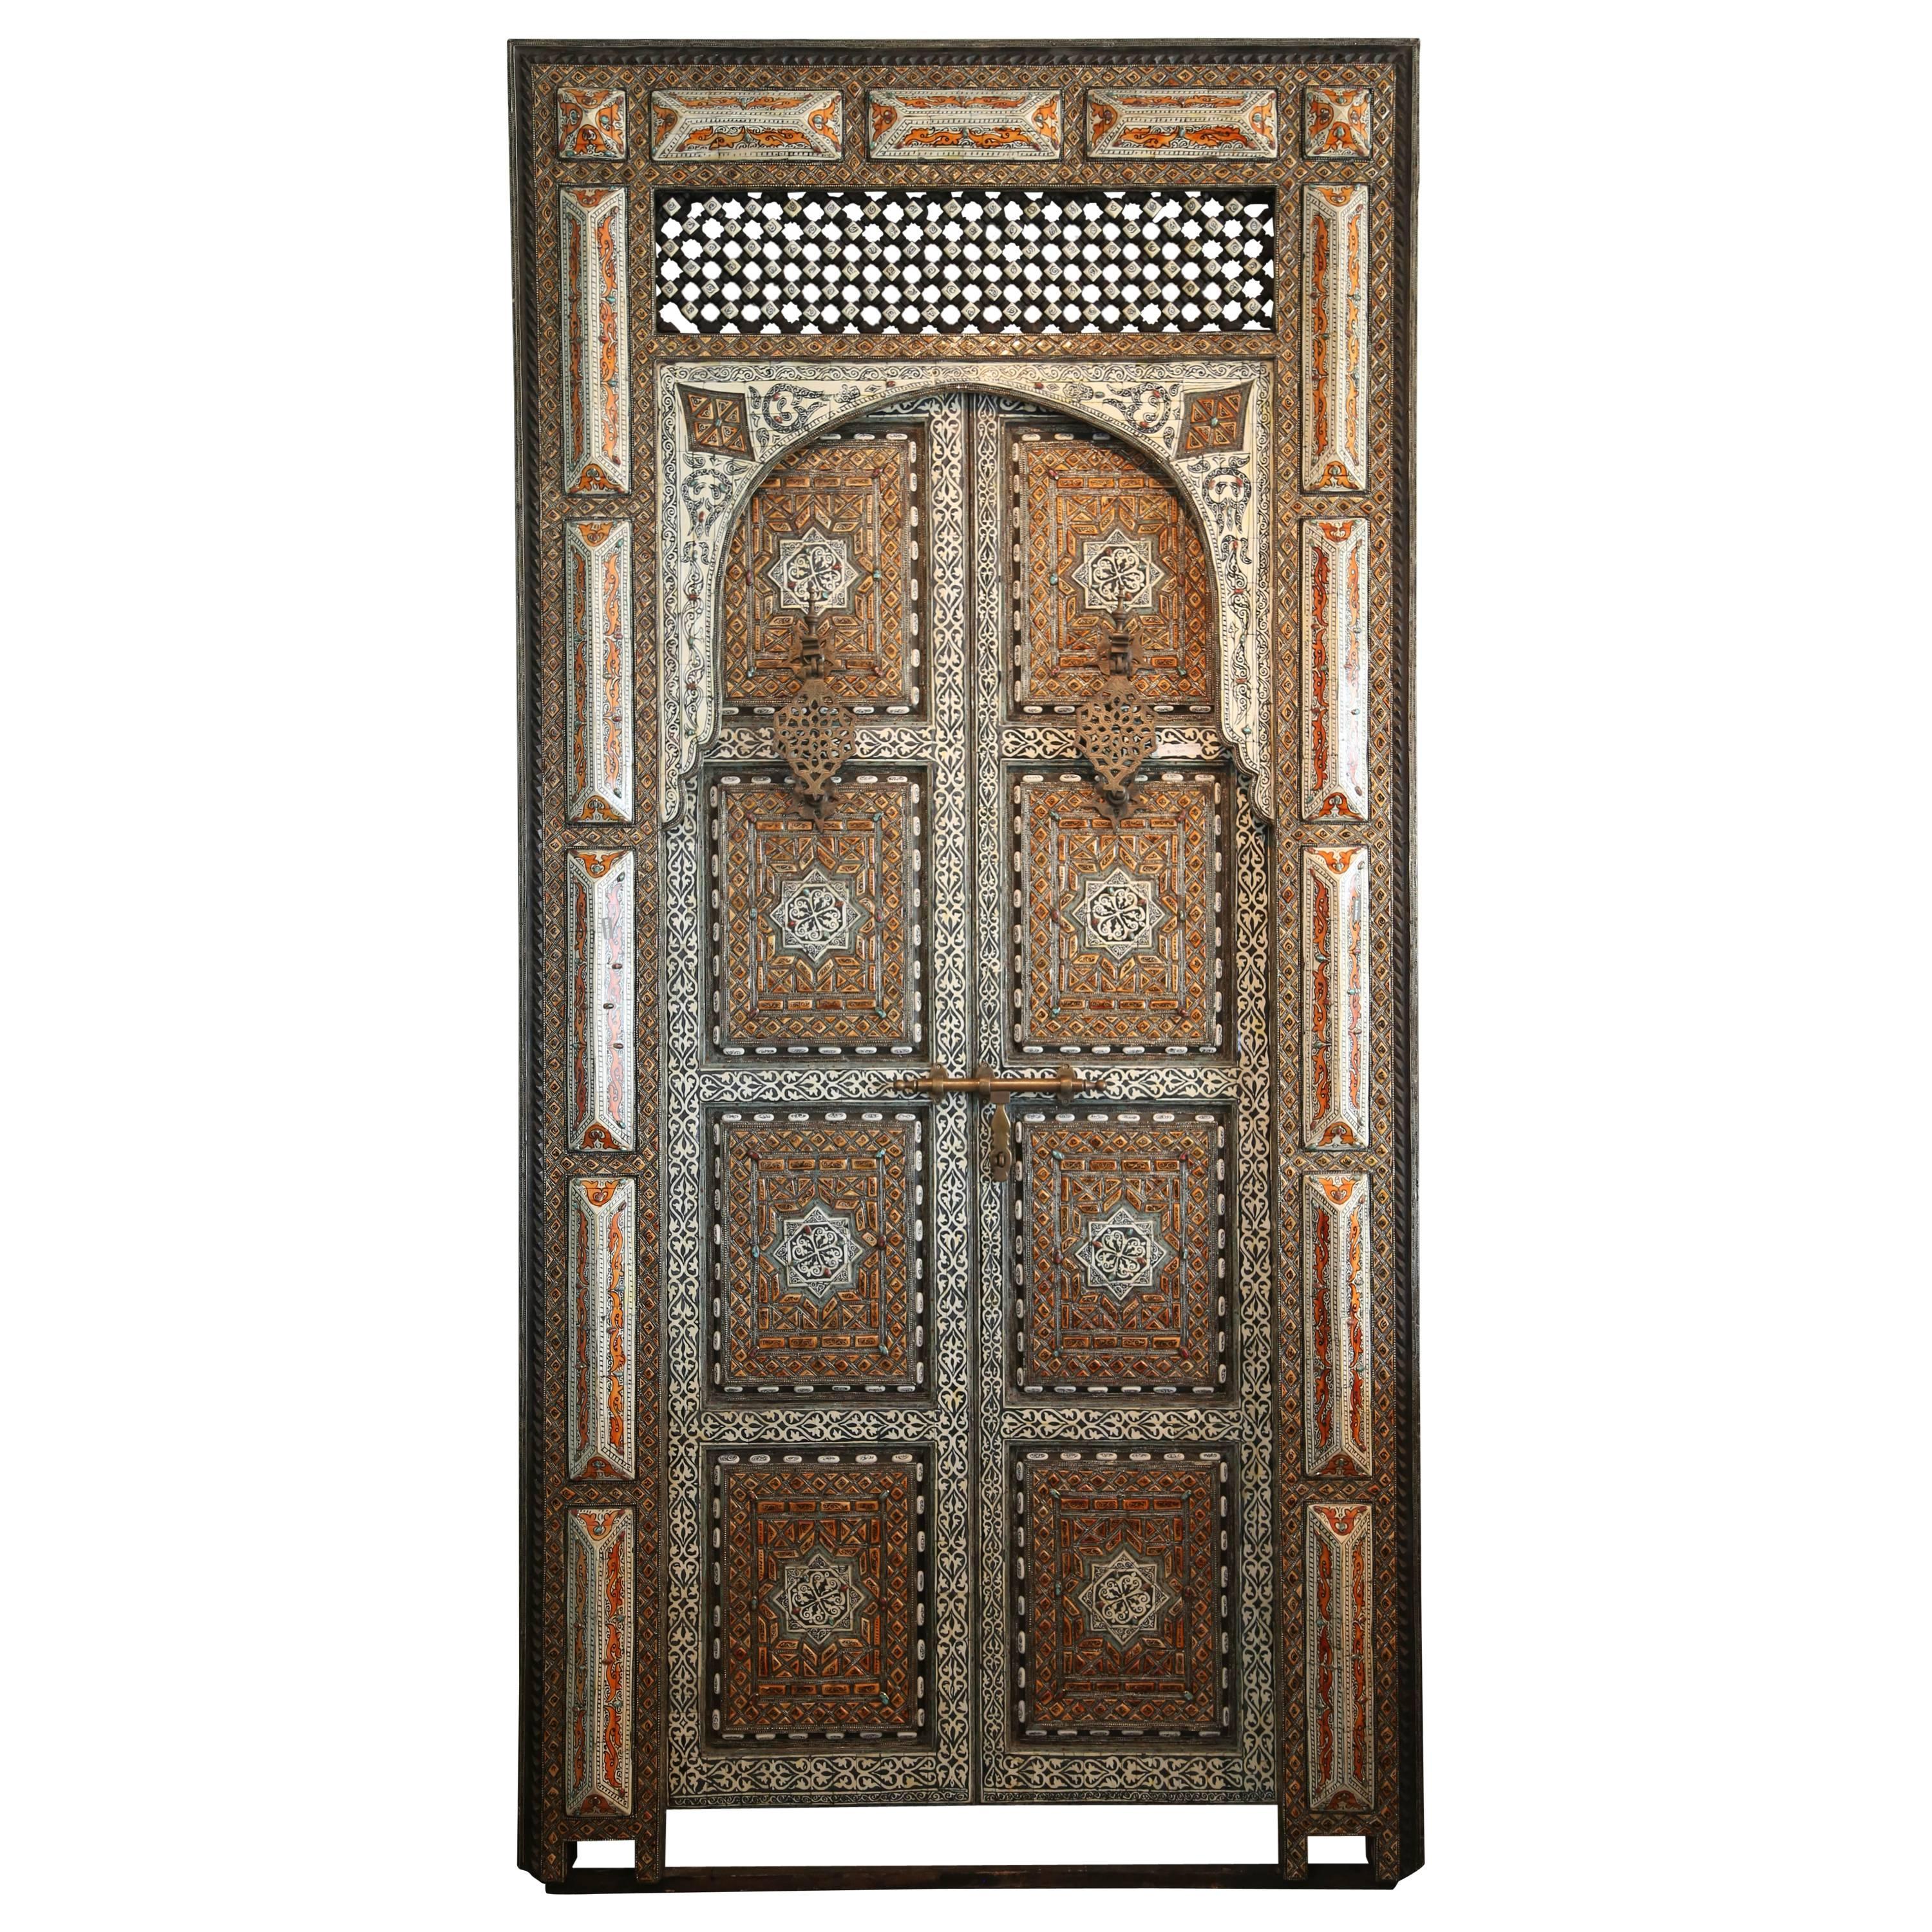 Exquisite 19th Century Moroccan Palace Door